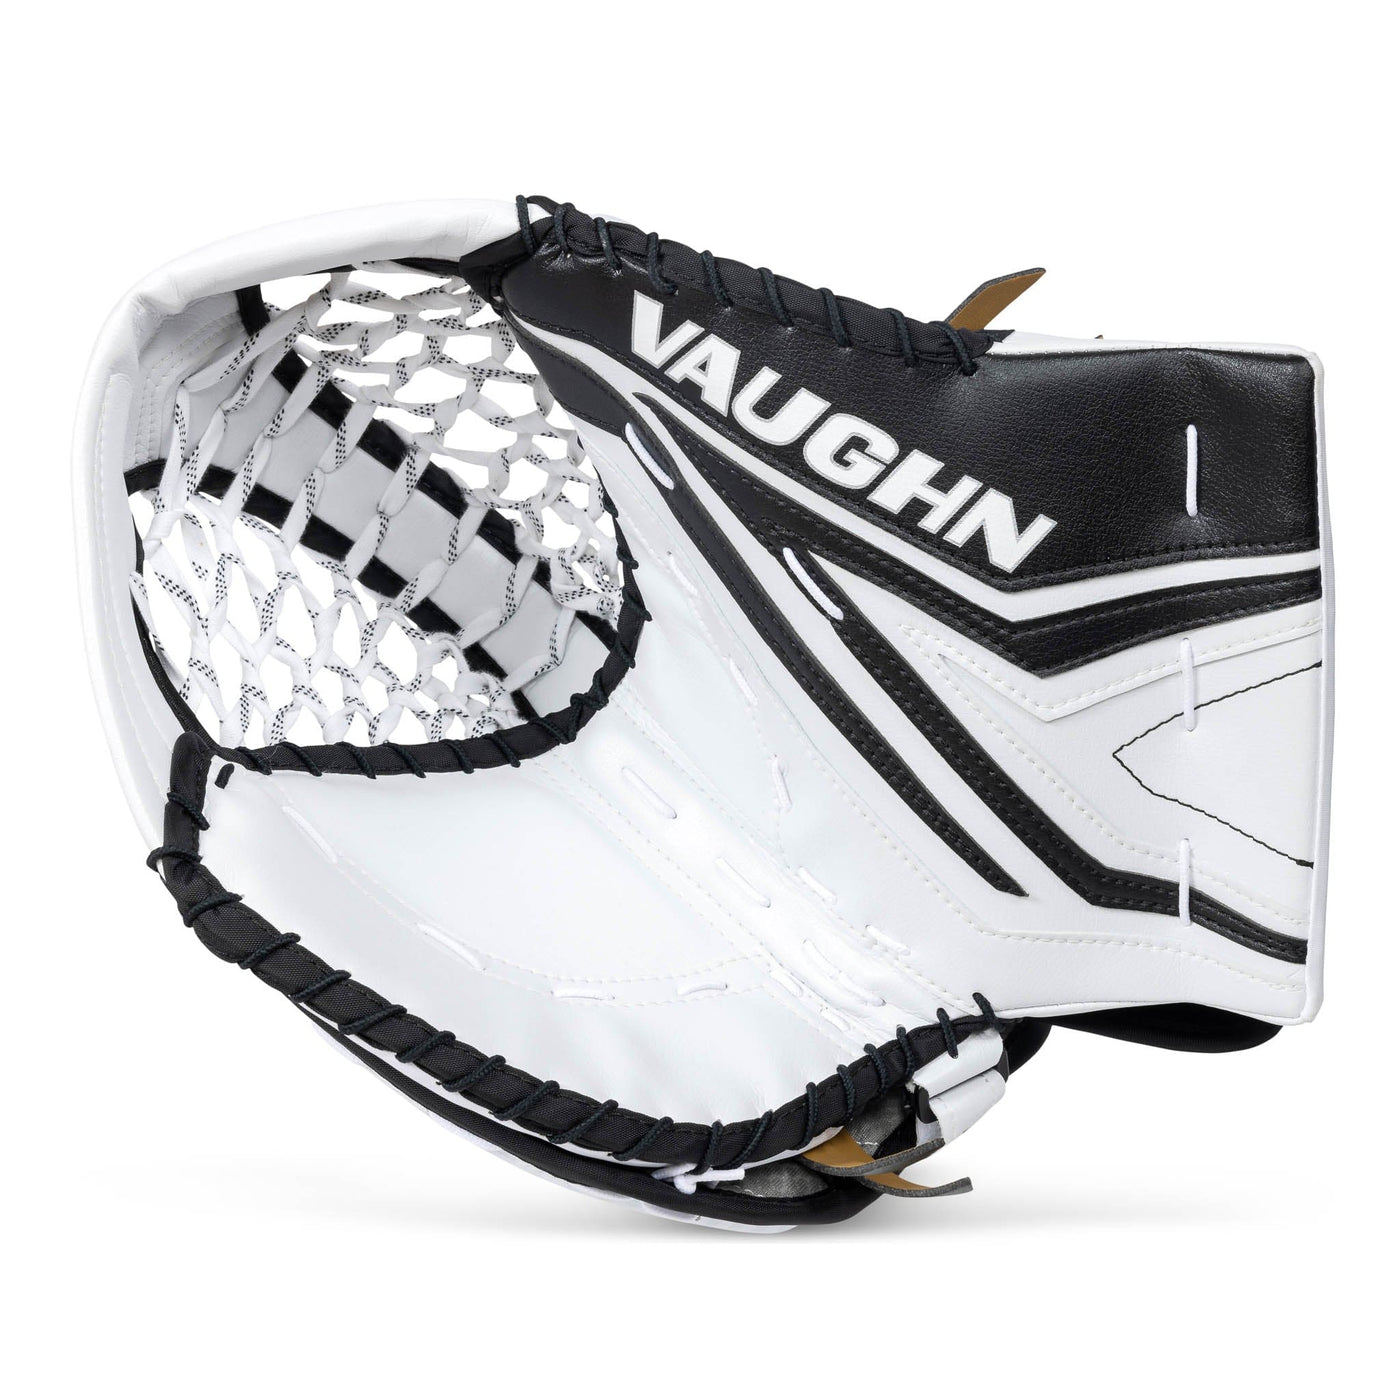 Vaughn Ventus SLR3 Pro Senior Goalie Catcher - The Hockey Shop Source For Sports